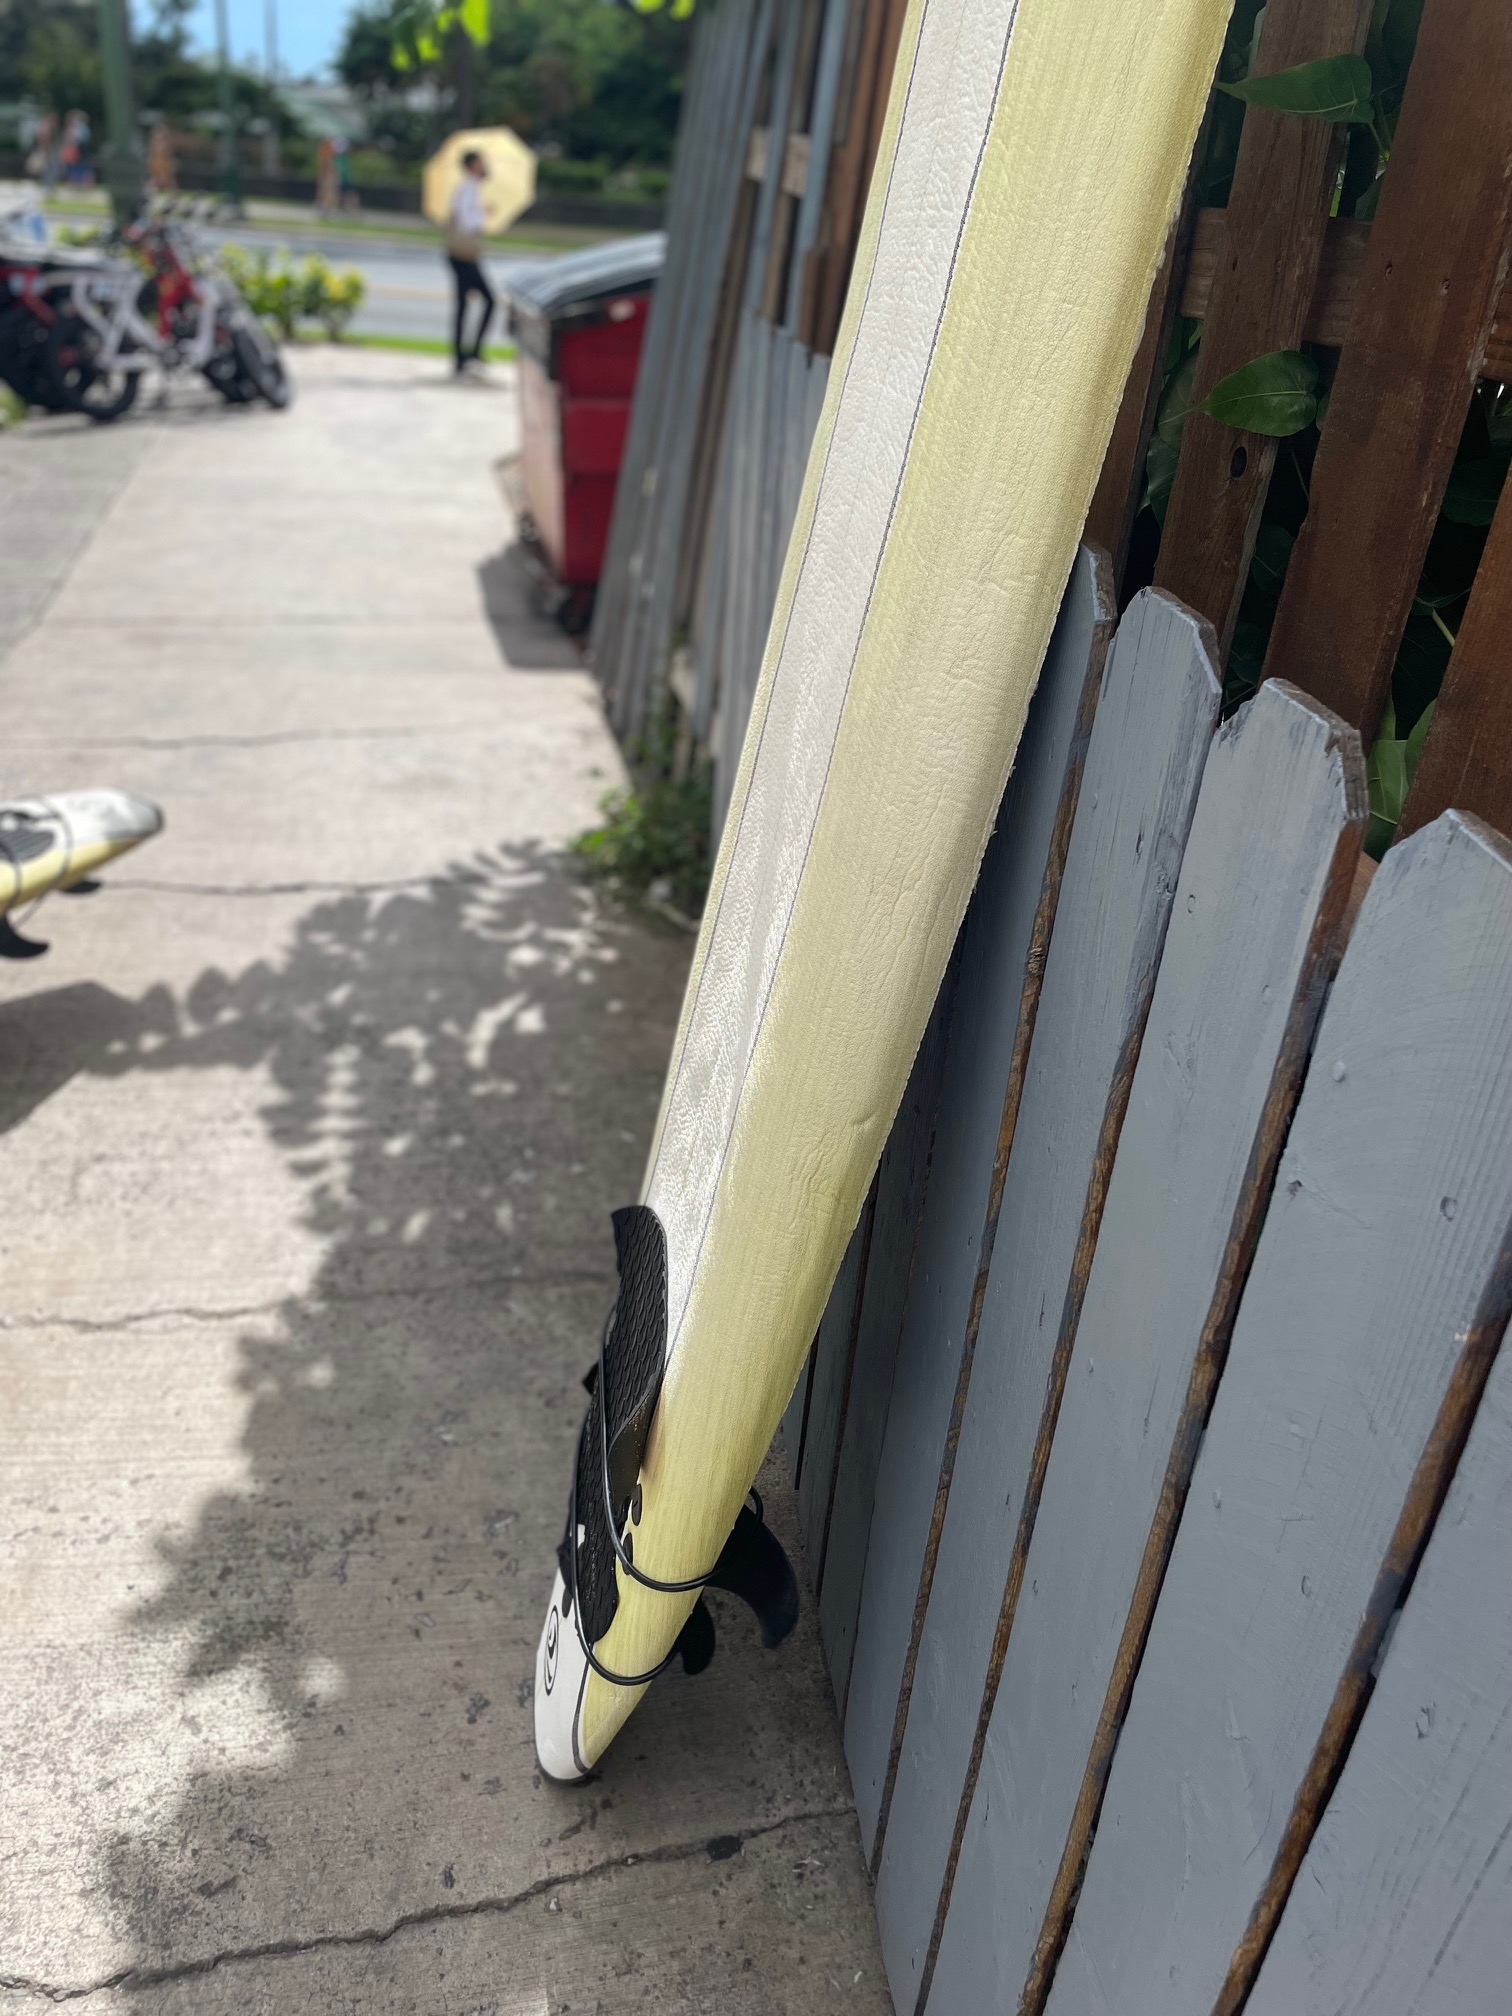 2021 Gerry Lopez Surfboard